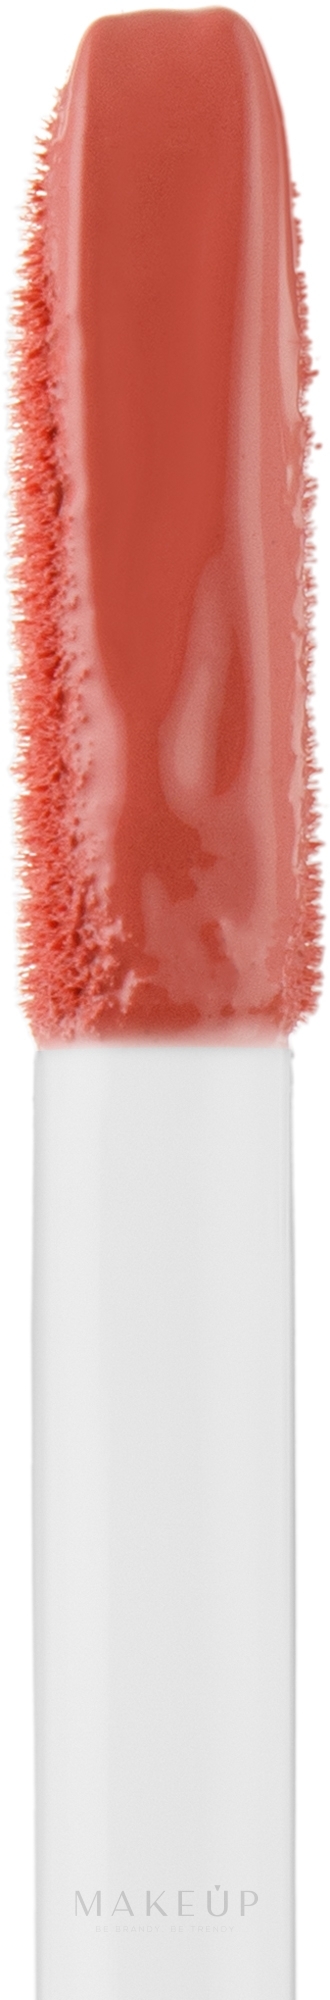 Flüssiger mattierender Lippenstift - Makeup Revolution Matte Lip — Bild 106 - Glorified